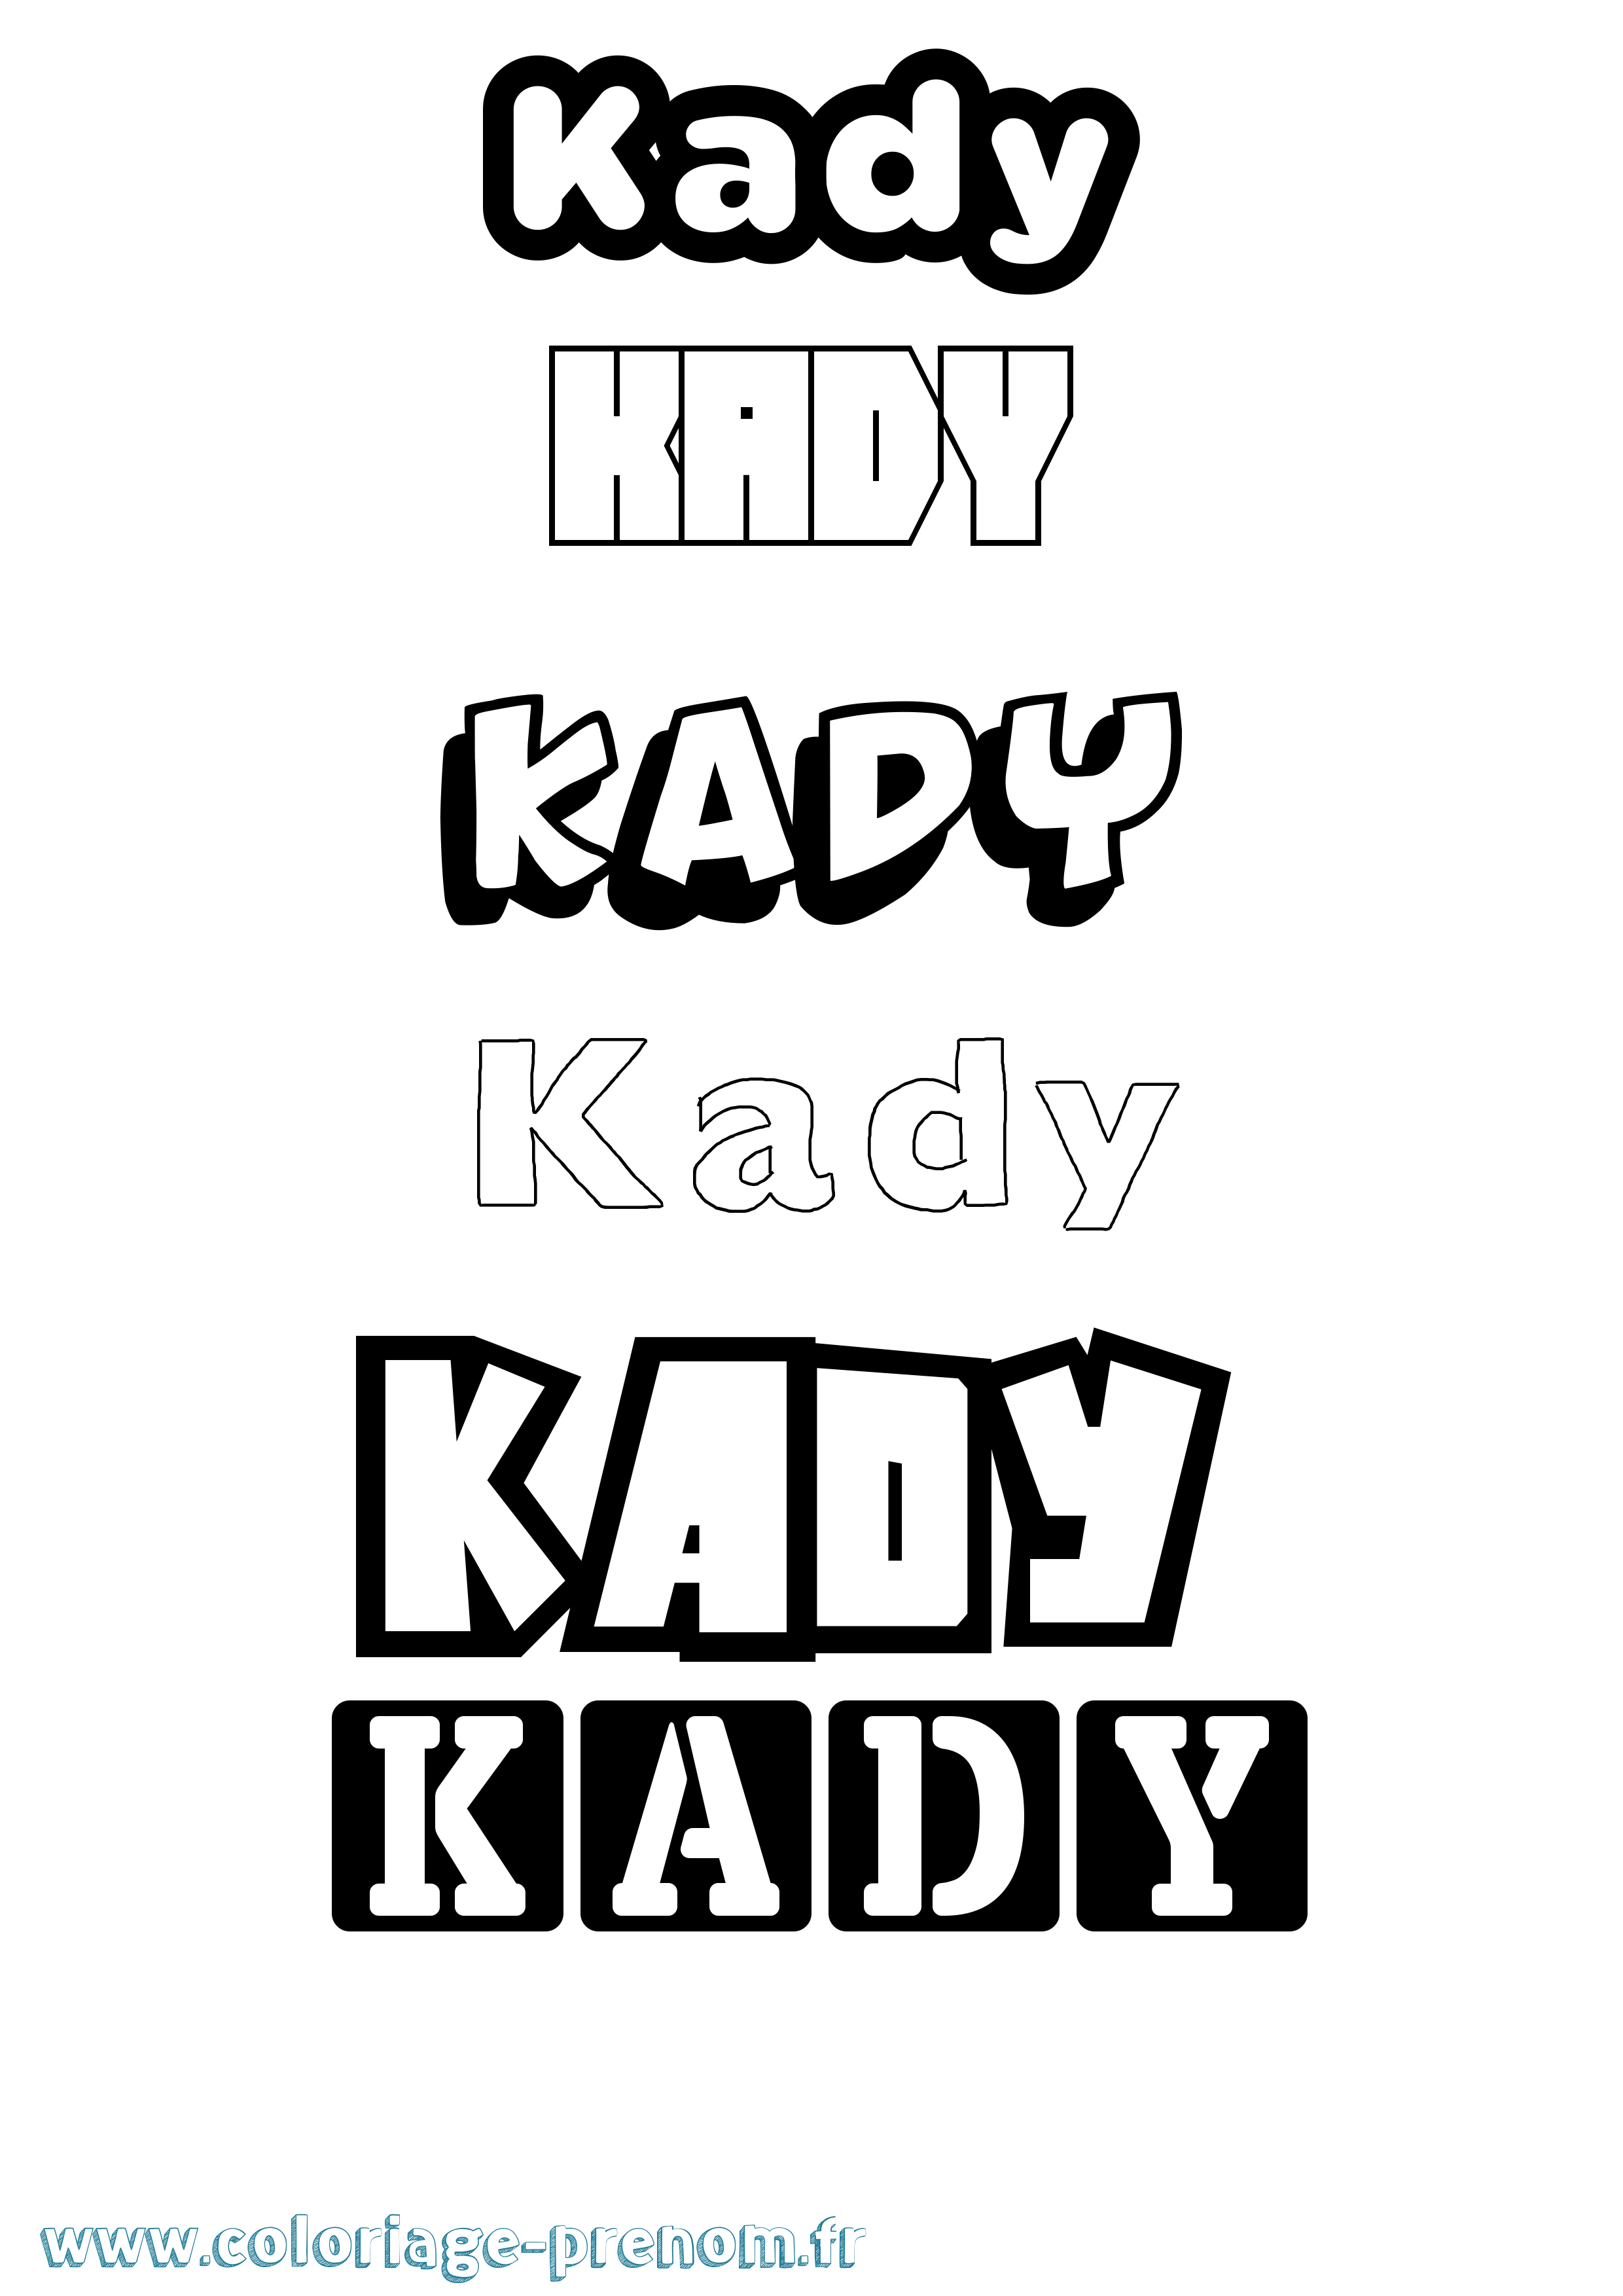 Coloriage prénom Kady